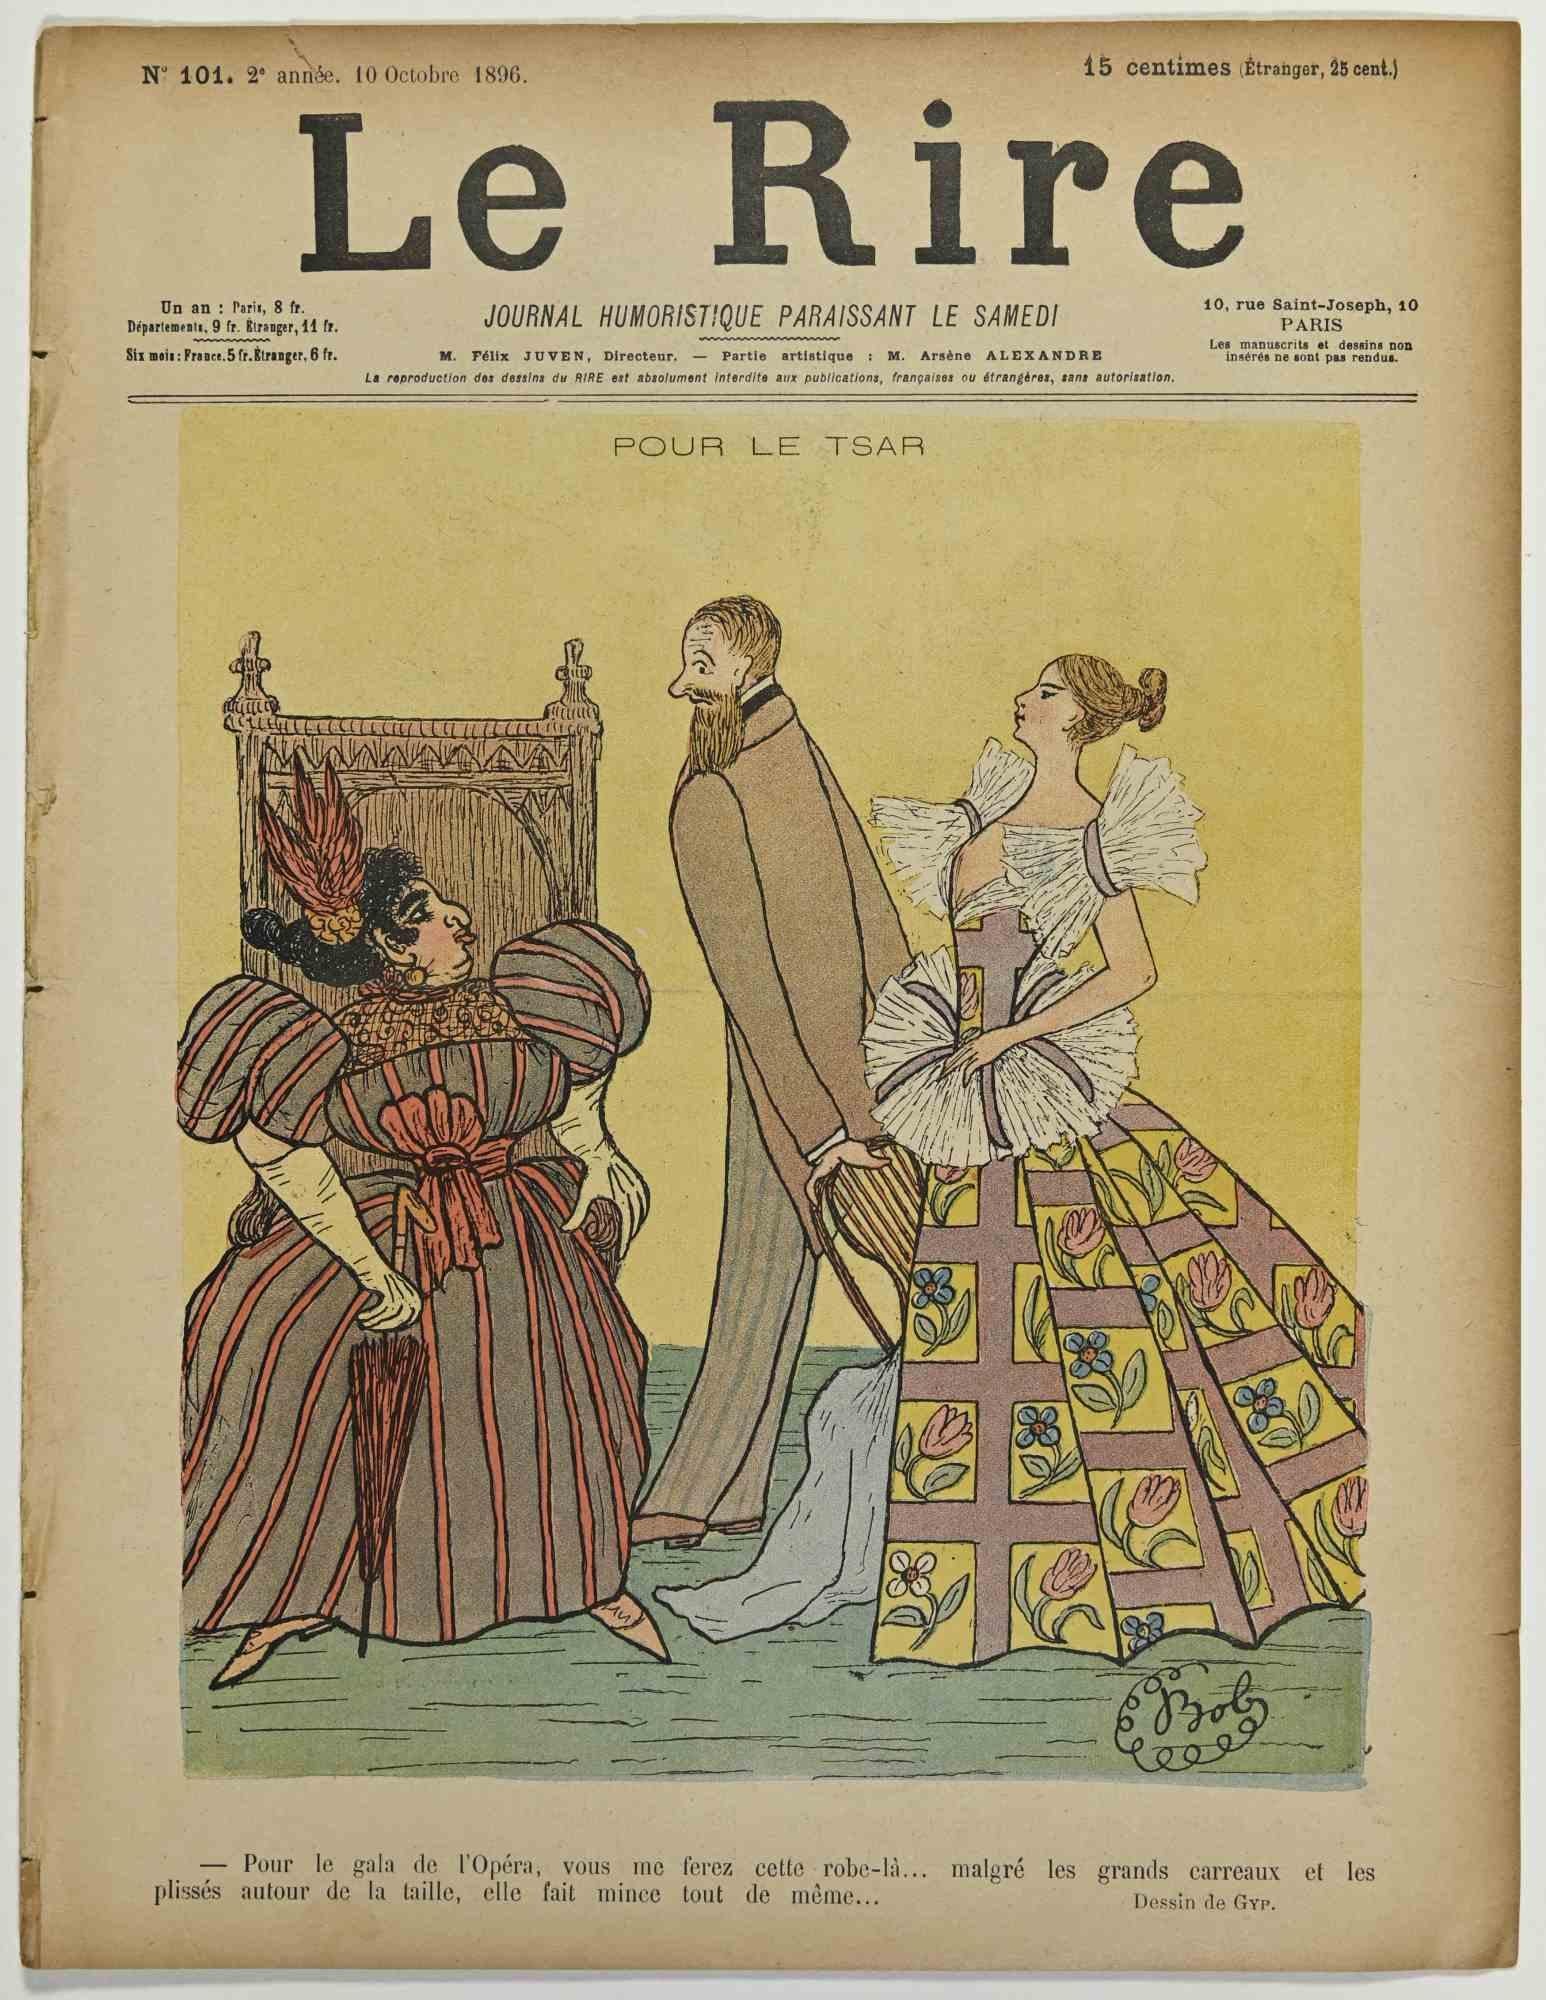 Le Rire - Illustrated Magazine after Lucien Metivet - 1896 - Modern Art by Lucien Métivet